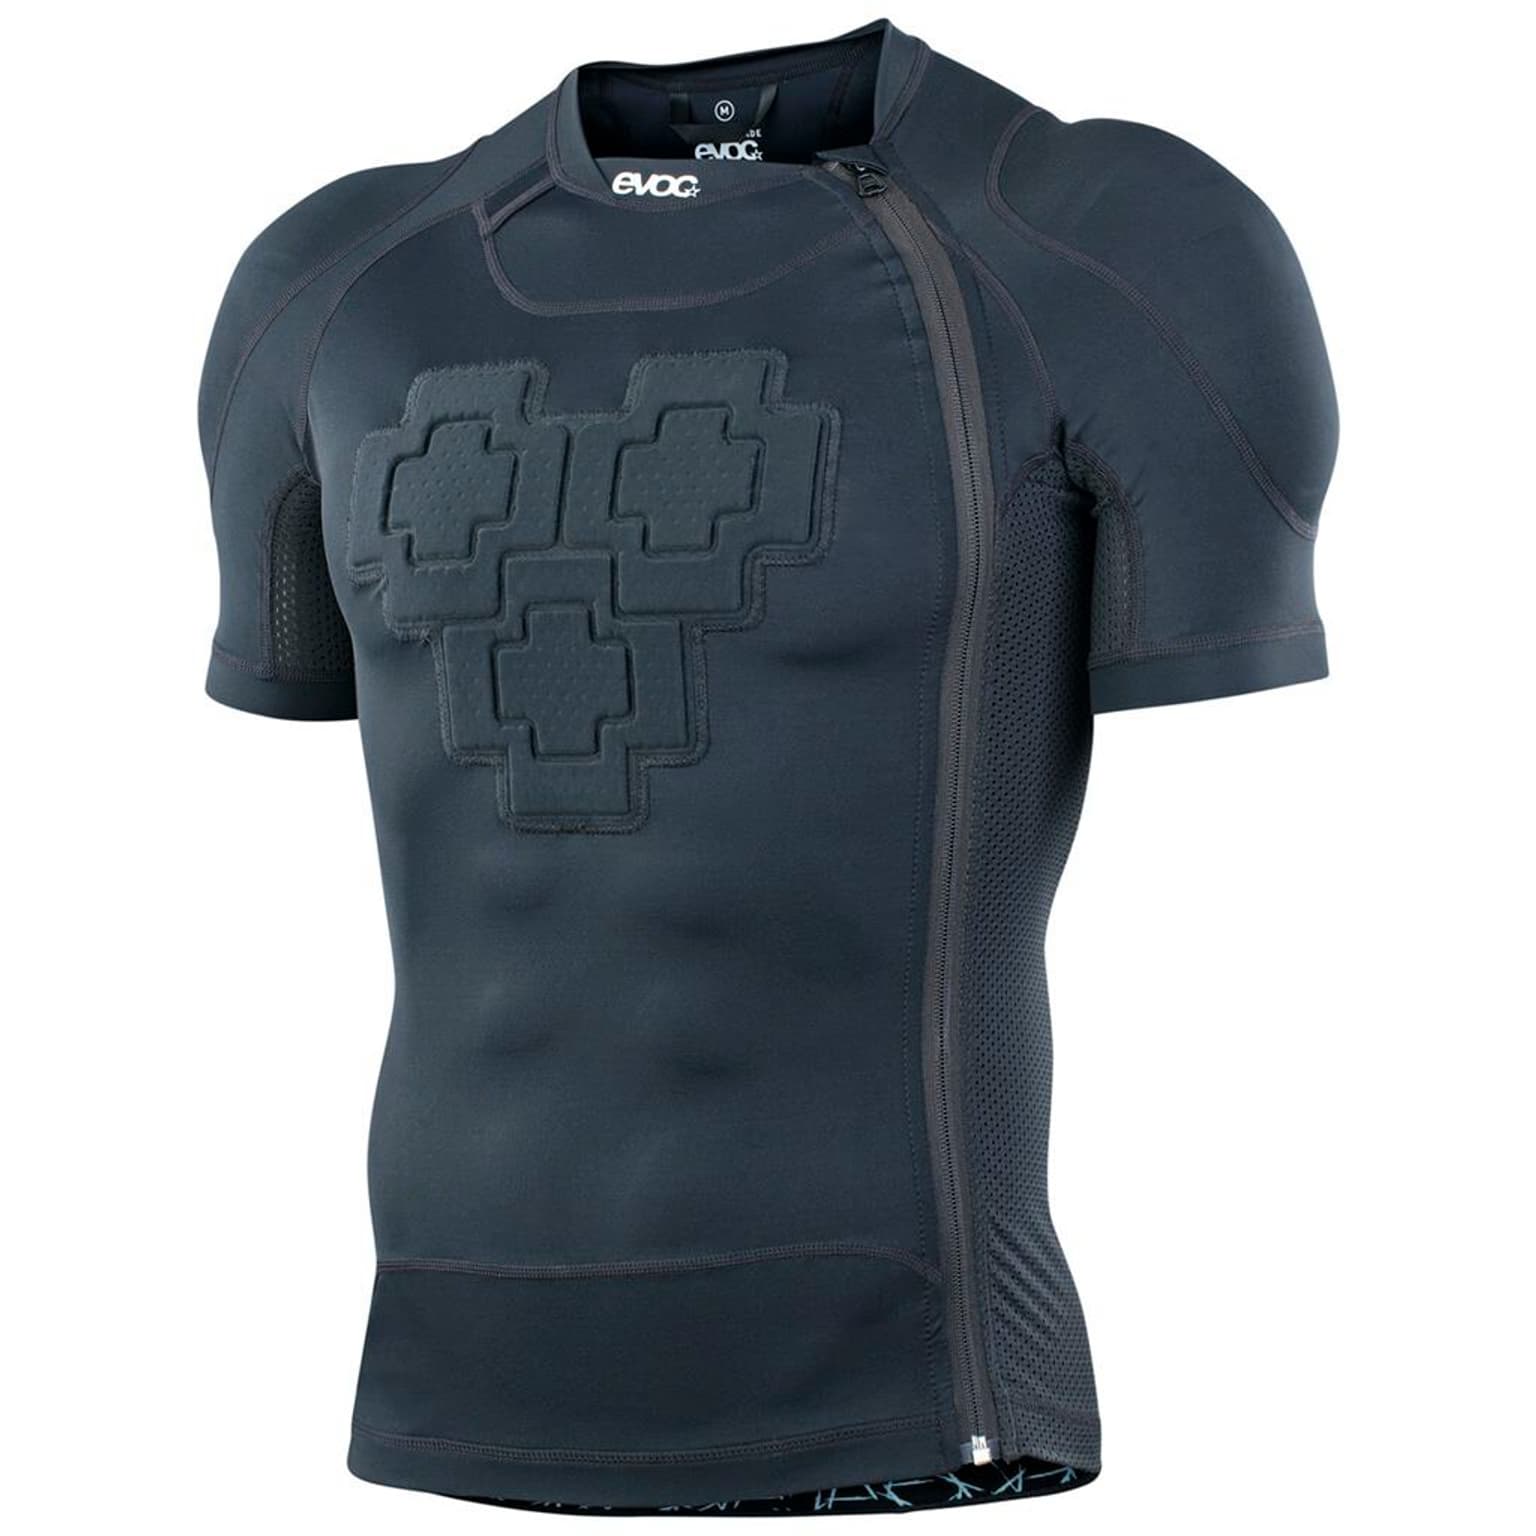 Evoc Evoc Protector Shirt Zip Protektoren schwarz 2